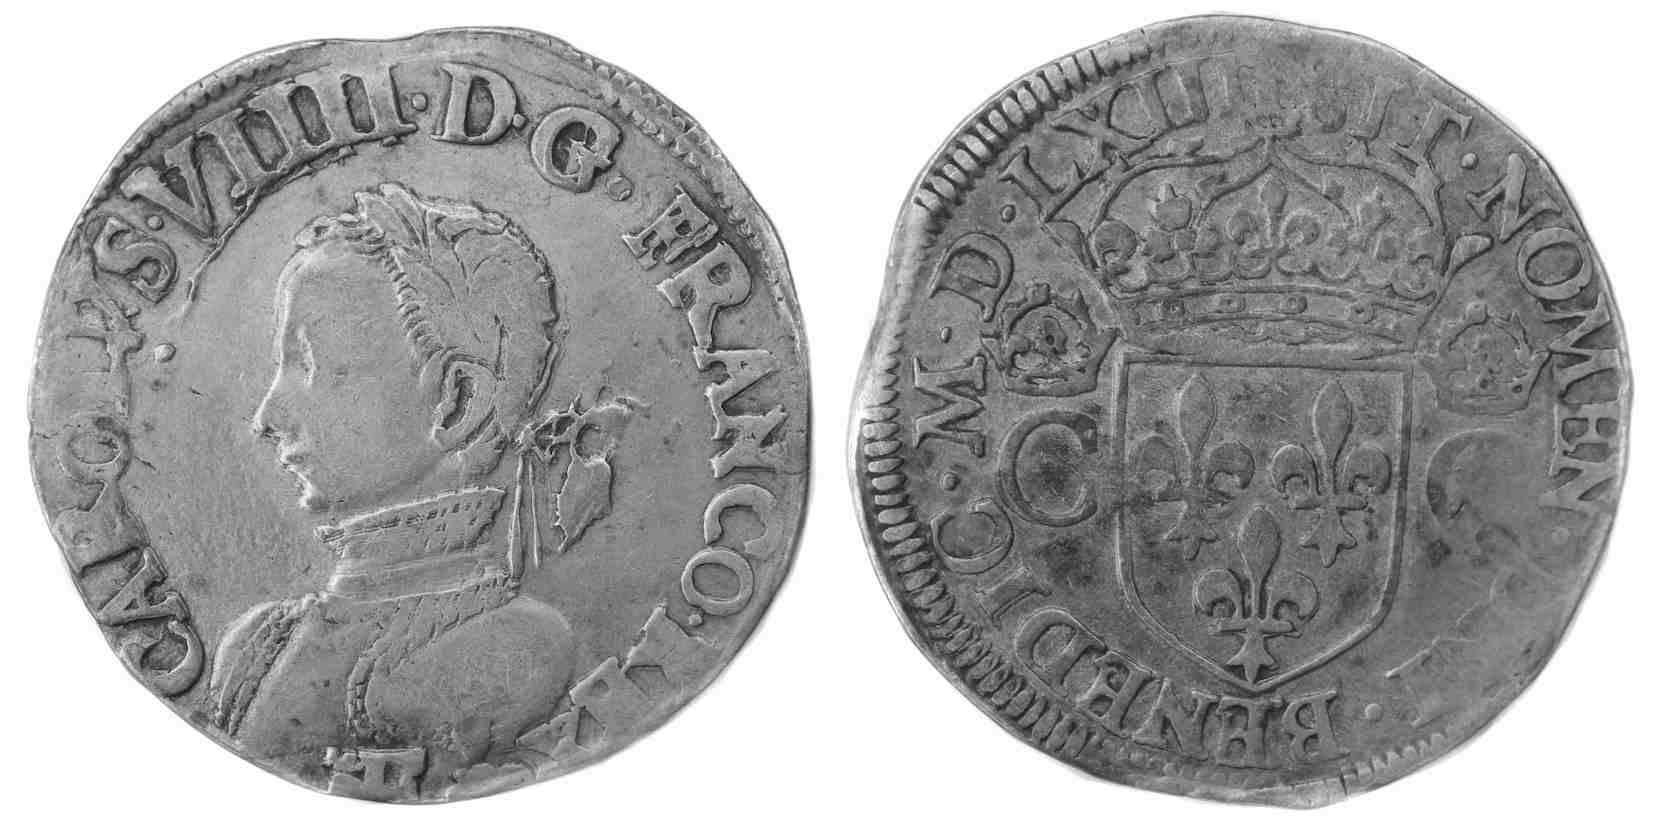 Monnaies royaes francaises CHARLES IX TESTON 1564 TOURS